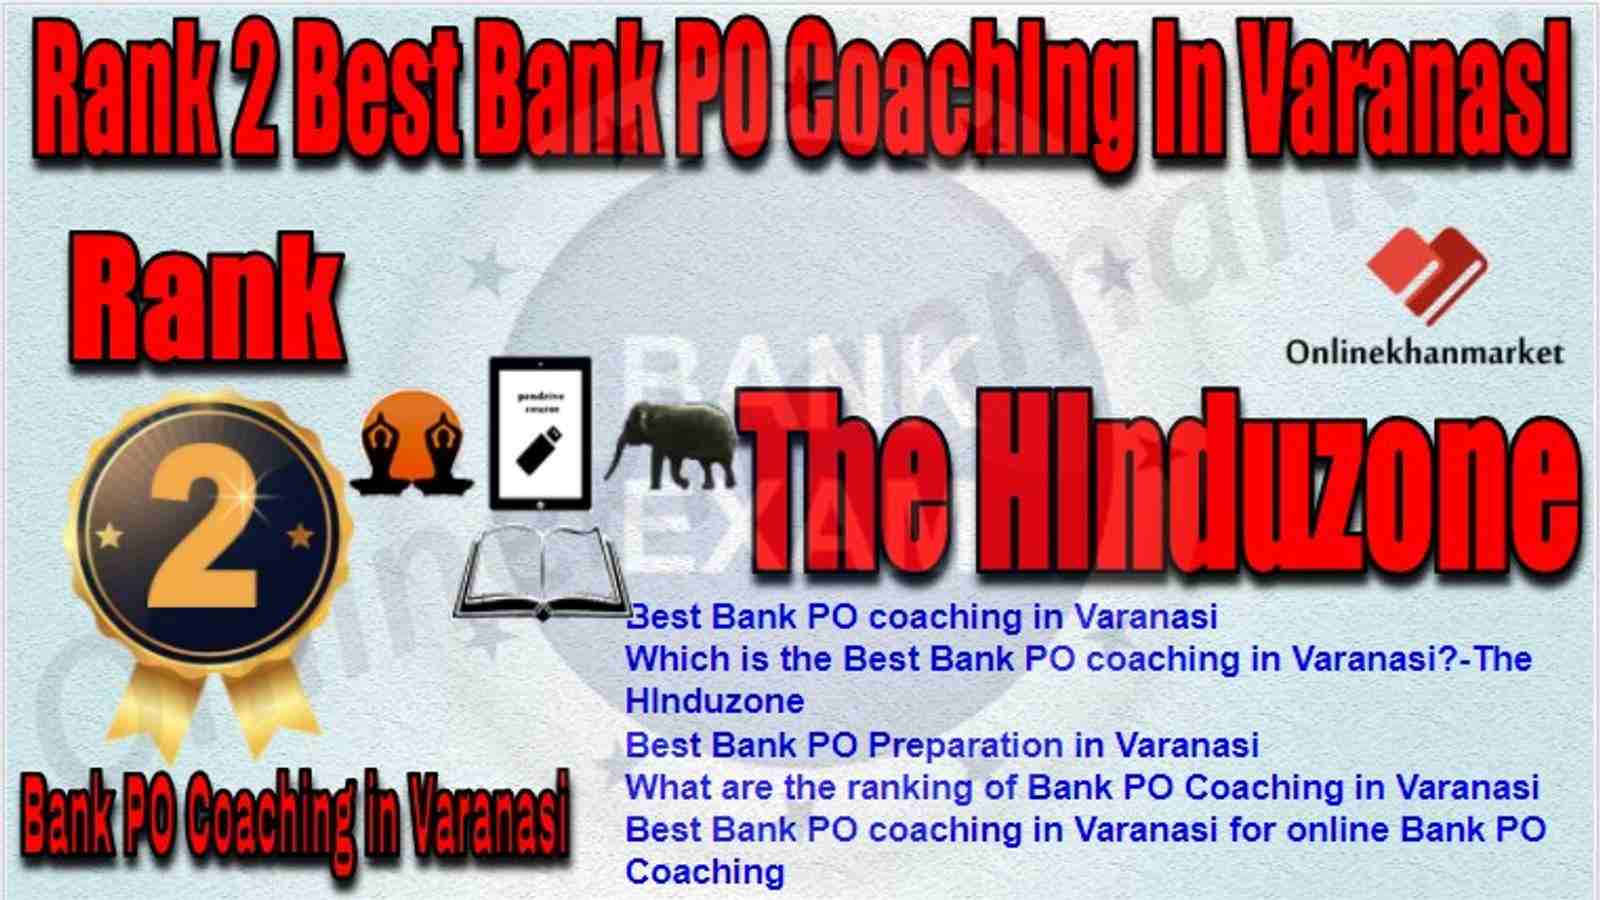 Rank 2 Best Bank PO Coaching in Varanasi